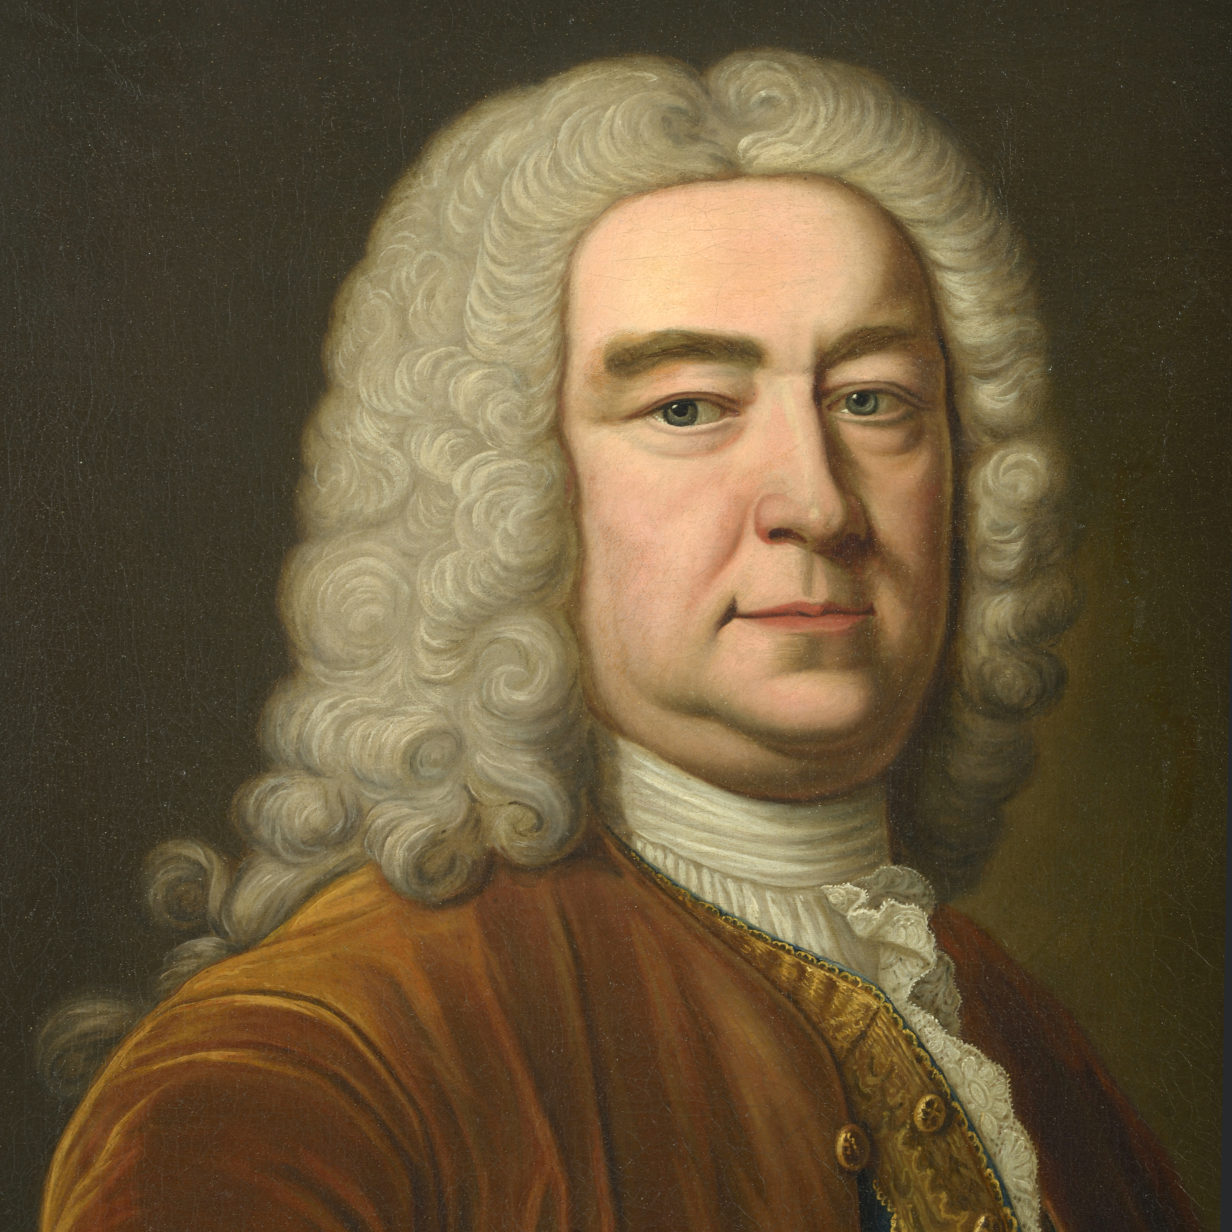 Studio of john giles eccardt, 18th century portrait of henry pelham